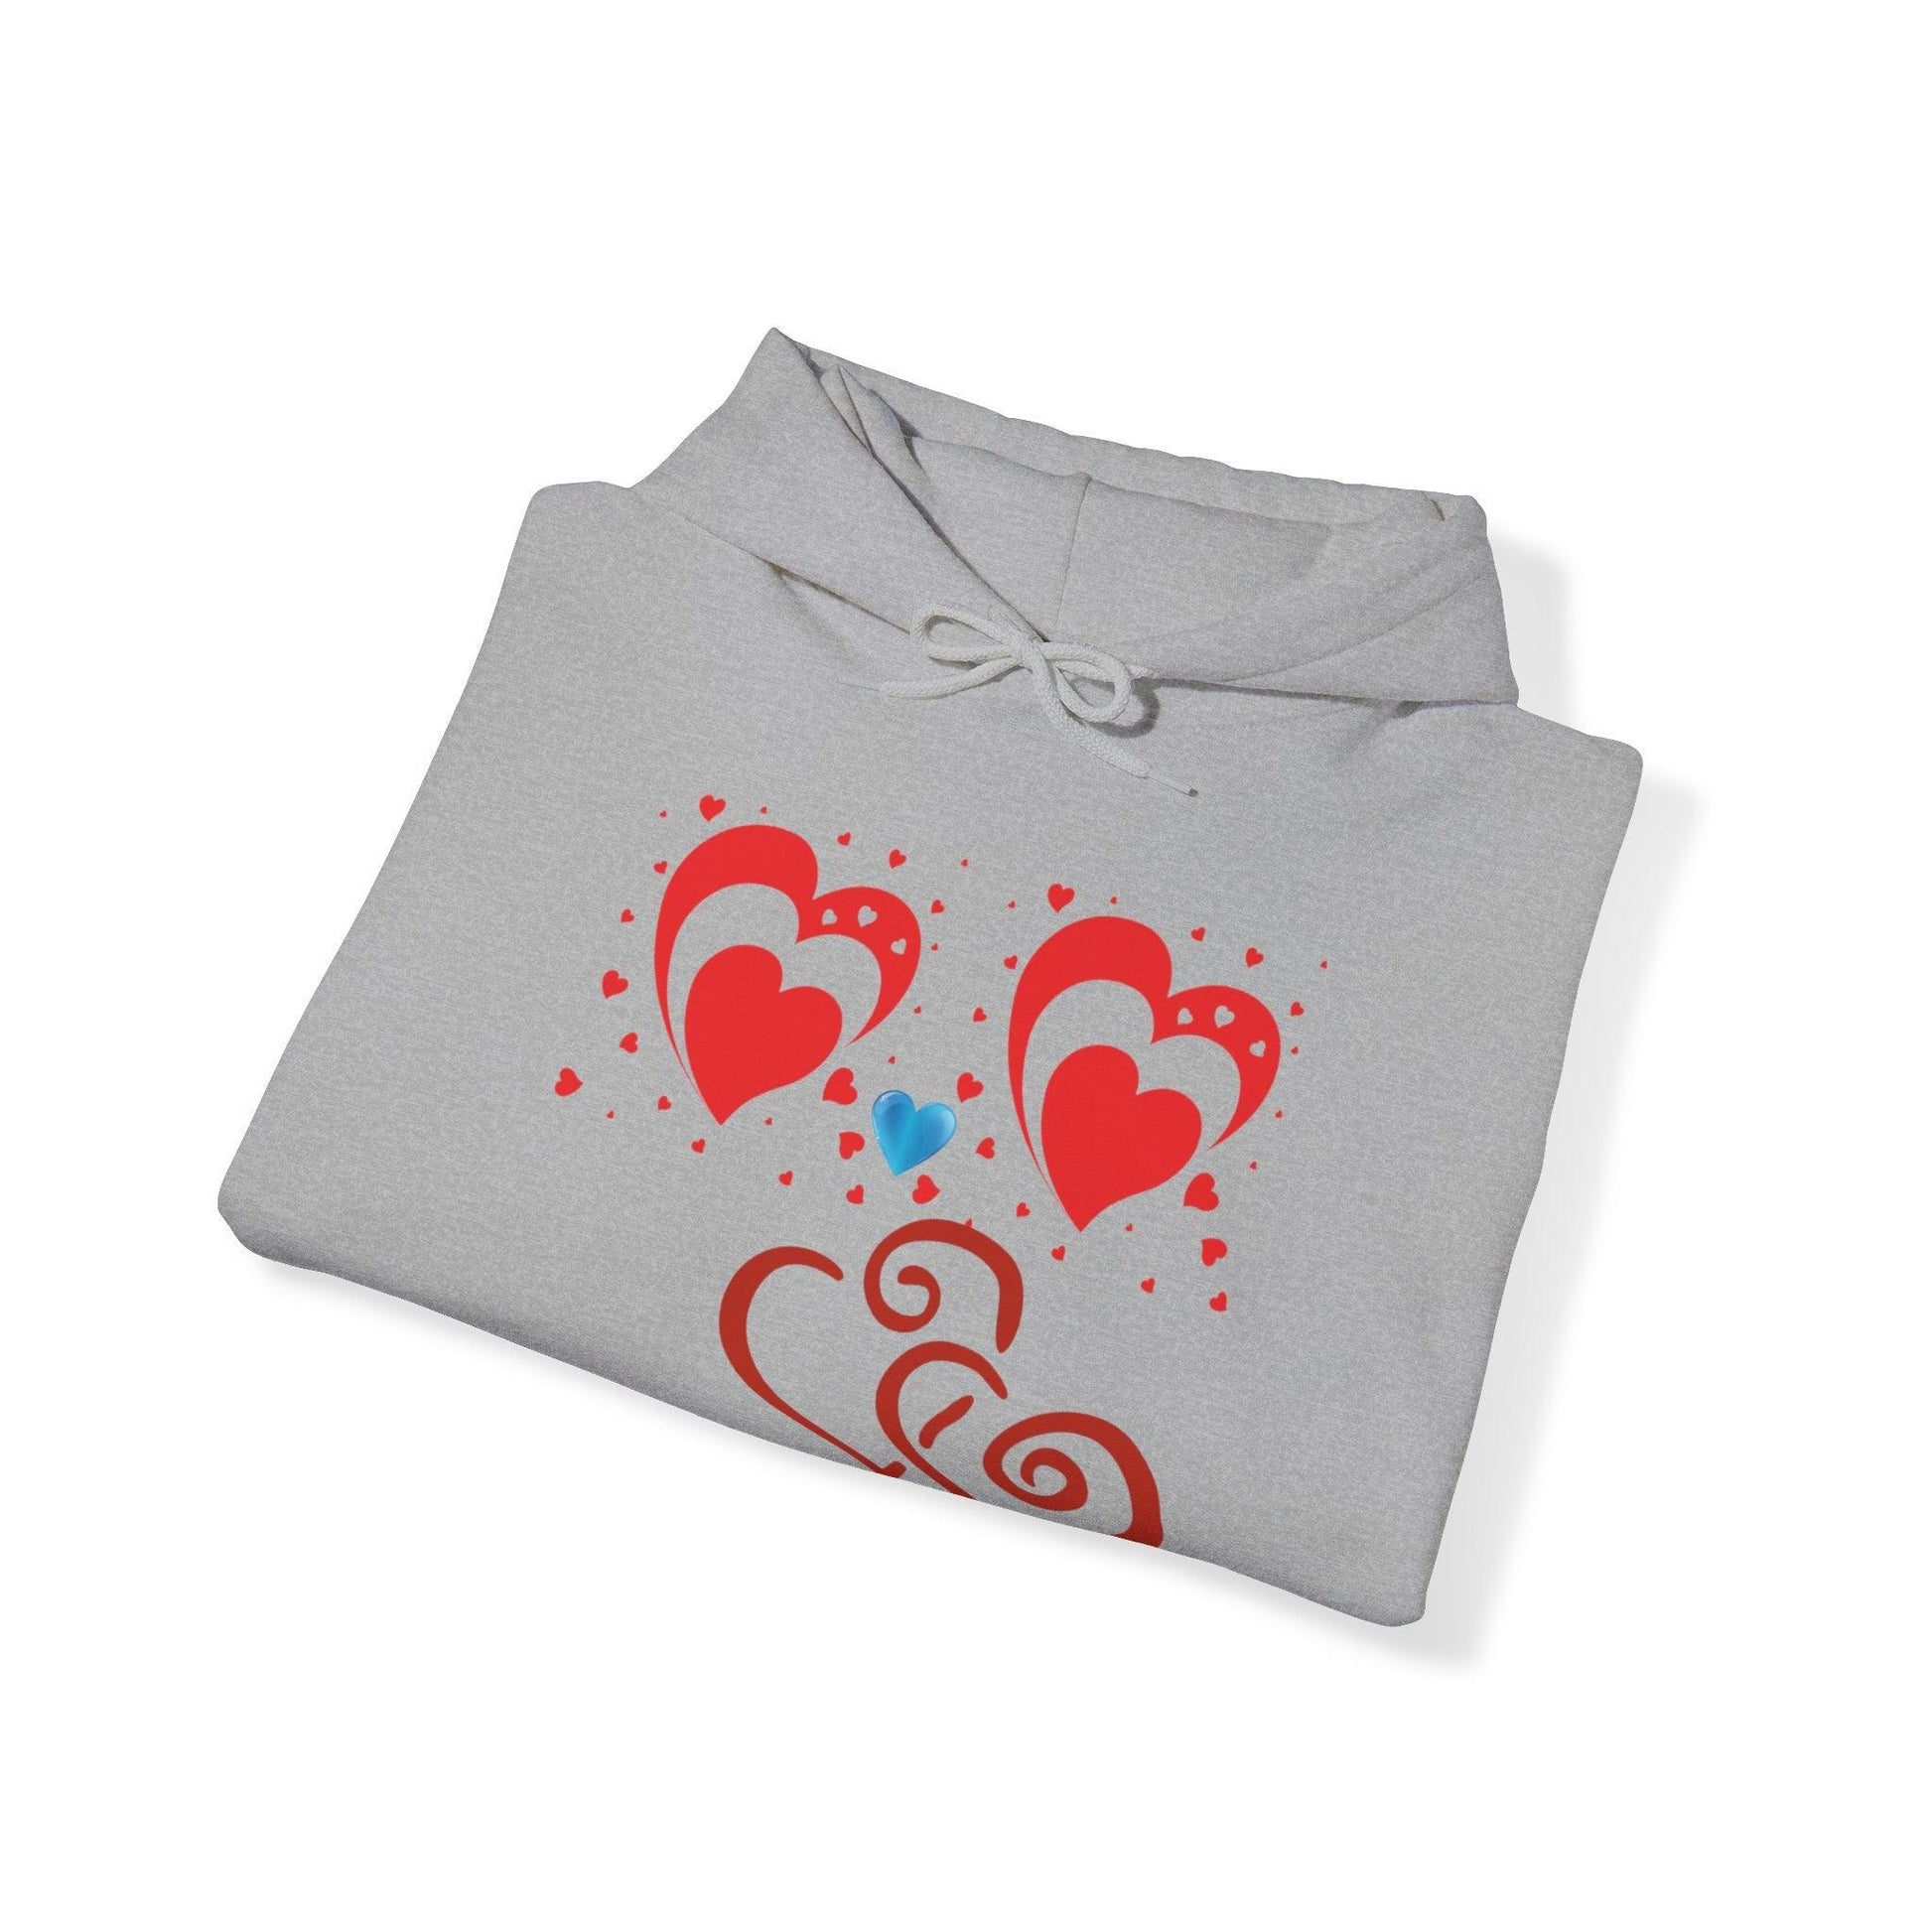 Love Heart Hooded Sweatshirt - COFFEEBRE